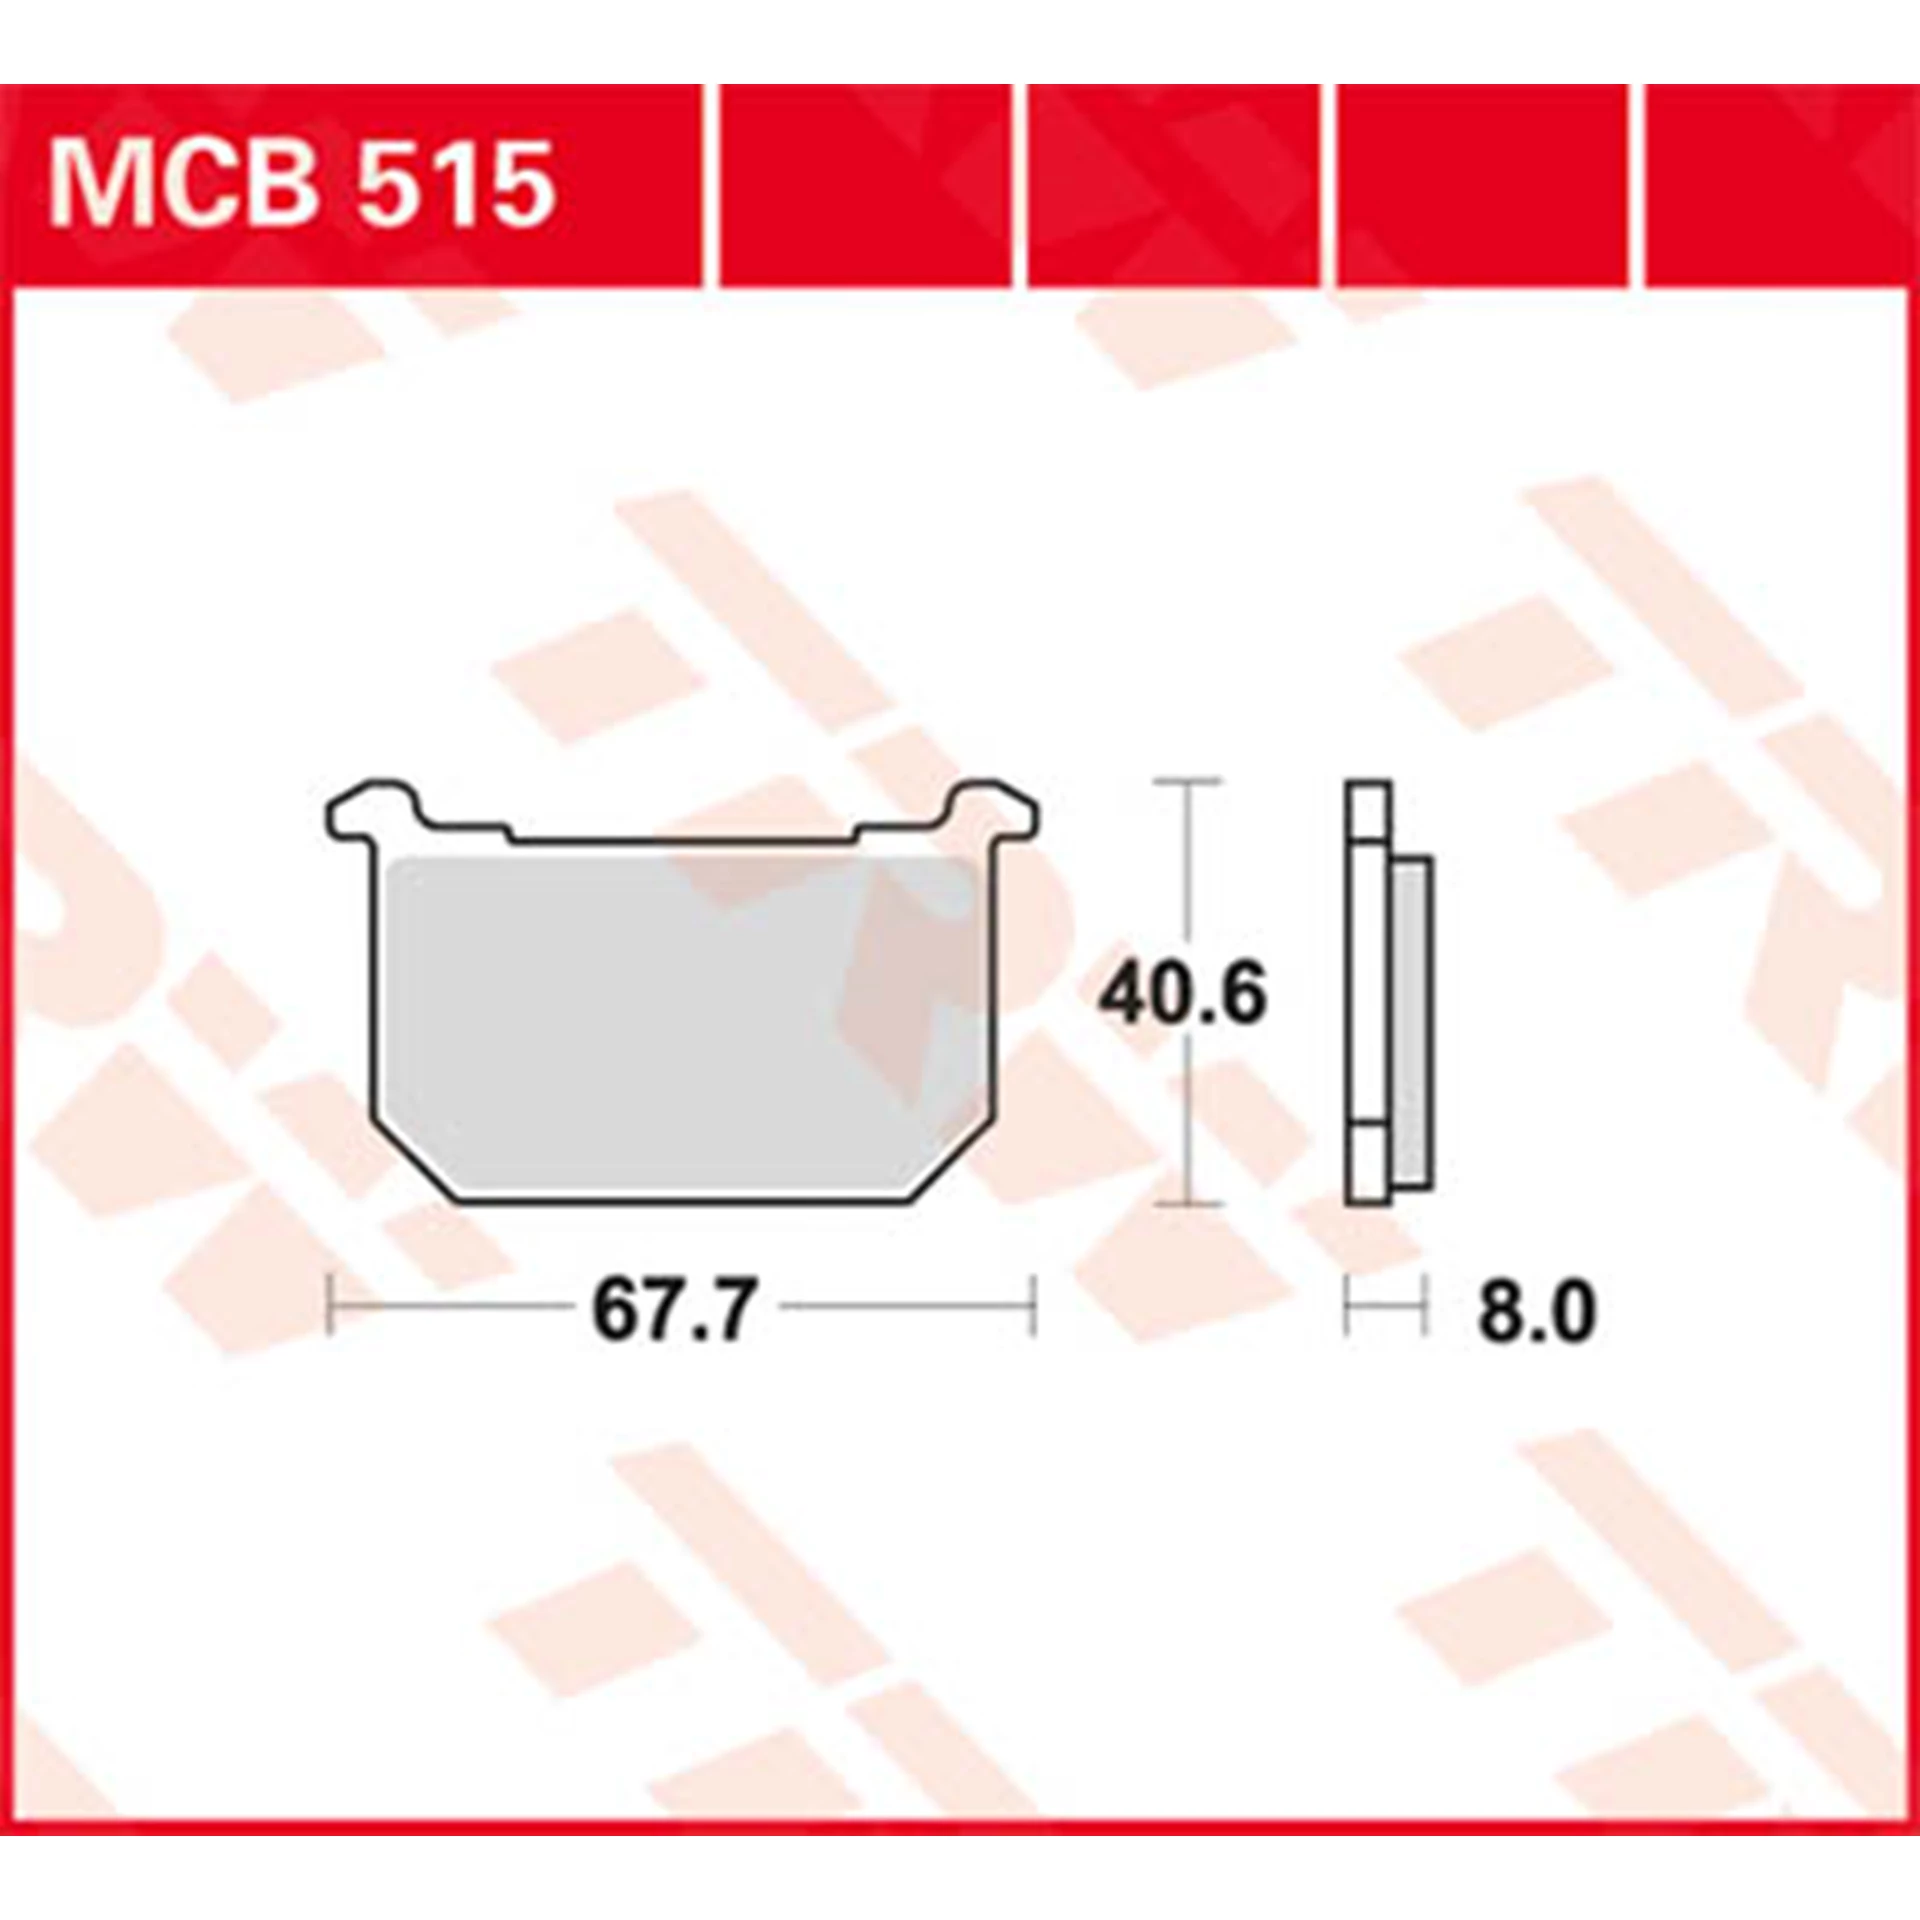 MCB515.jpg